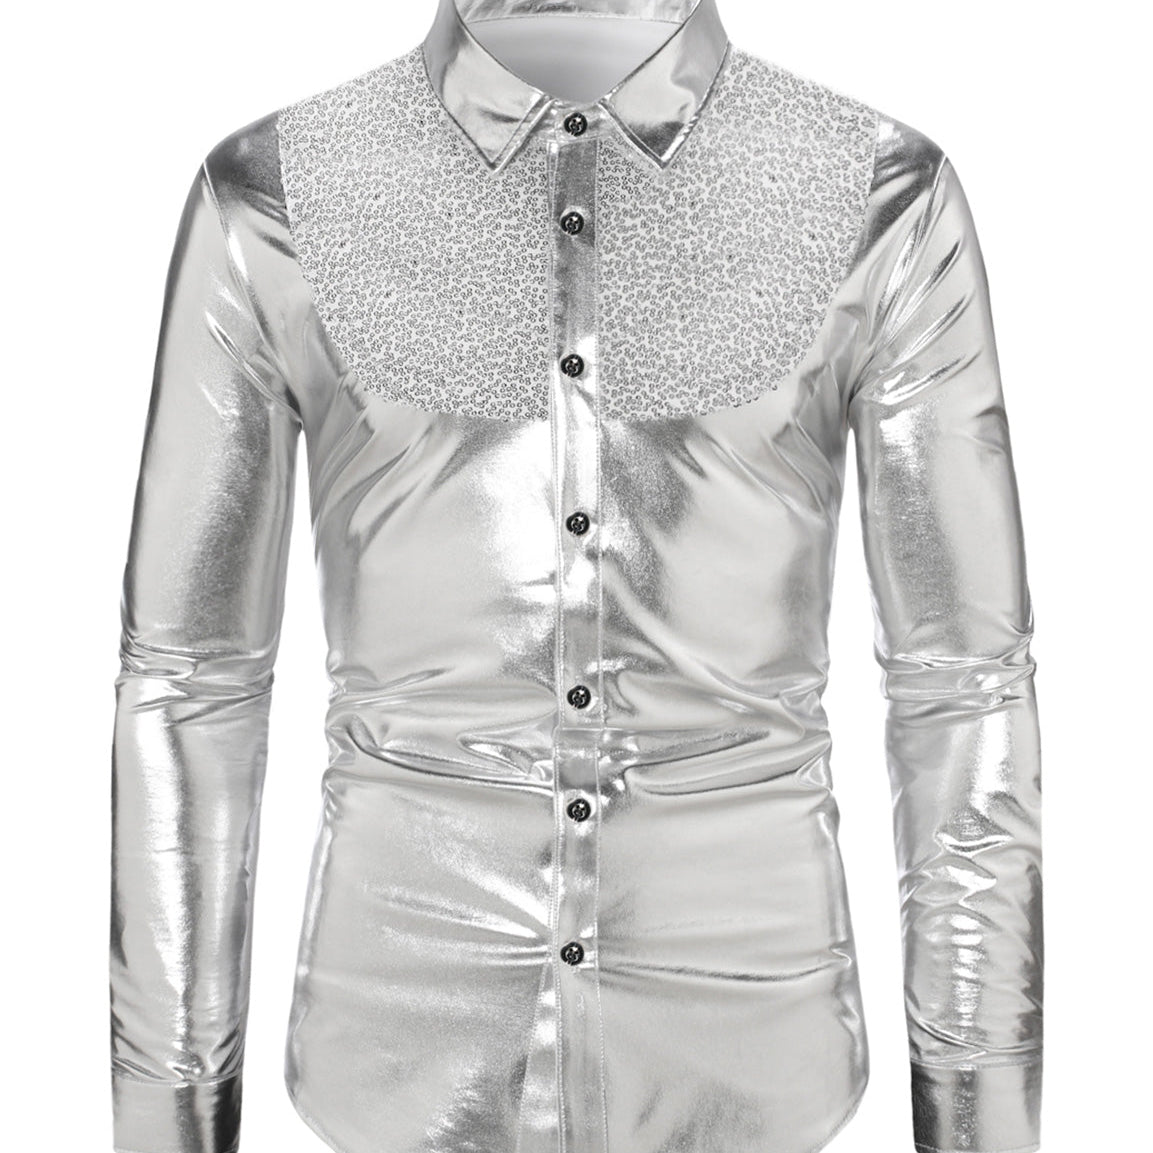 Men's Button Up Luxury Shiny Tuxedo Party Costume Long Sleeve Dress Shirt